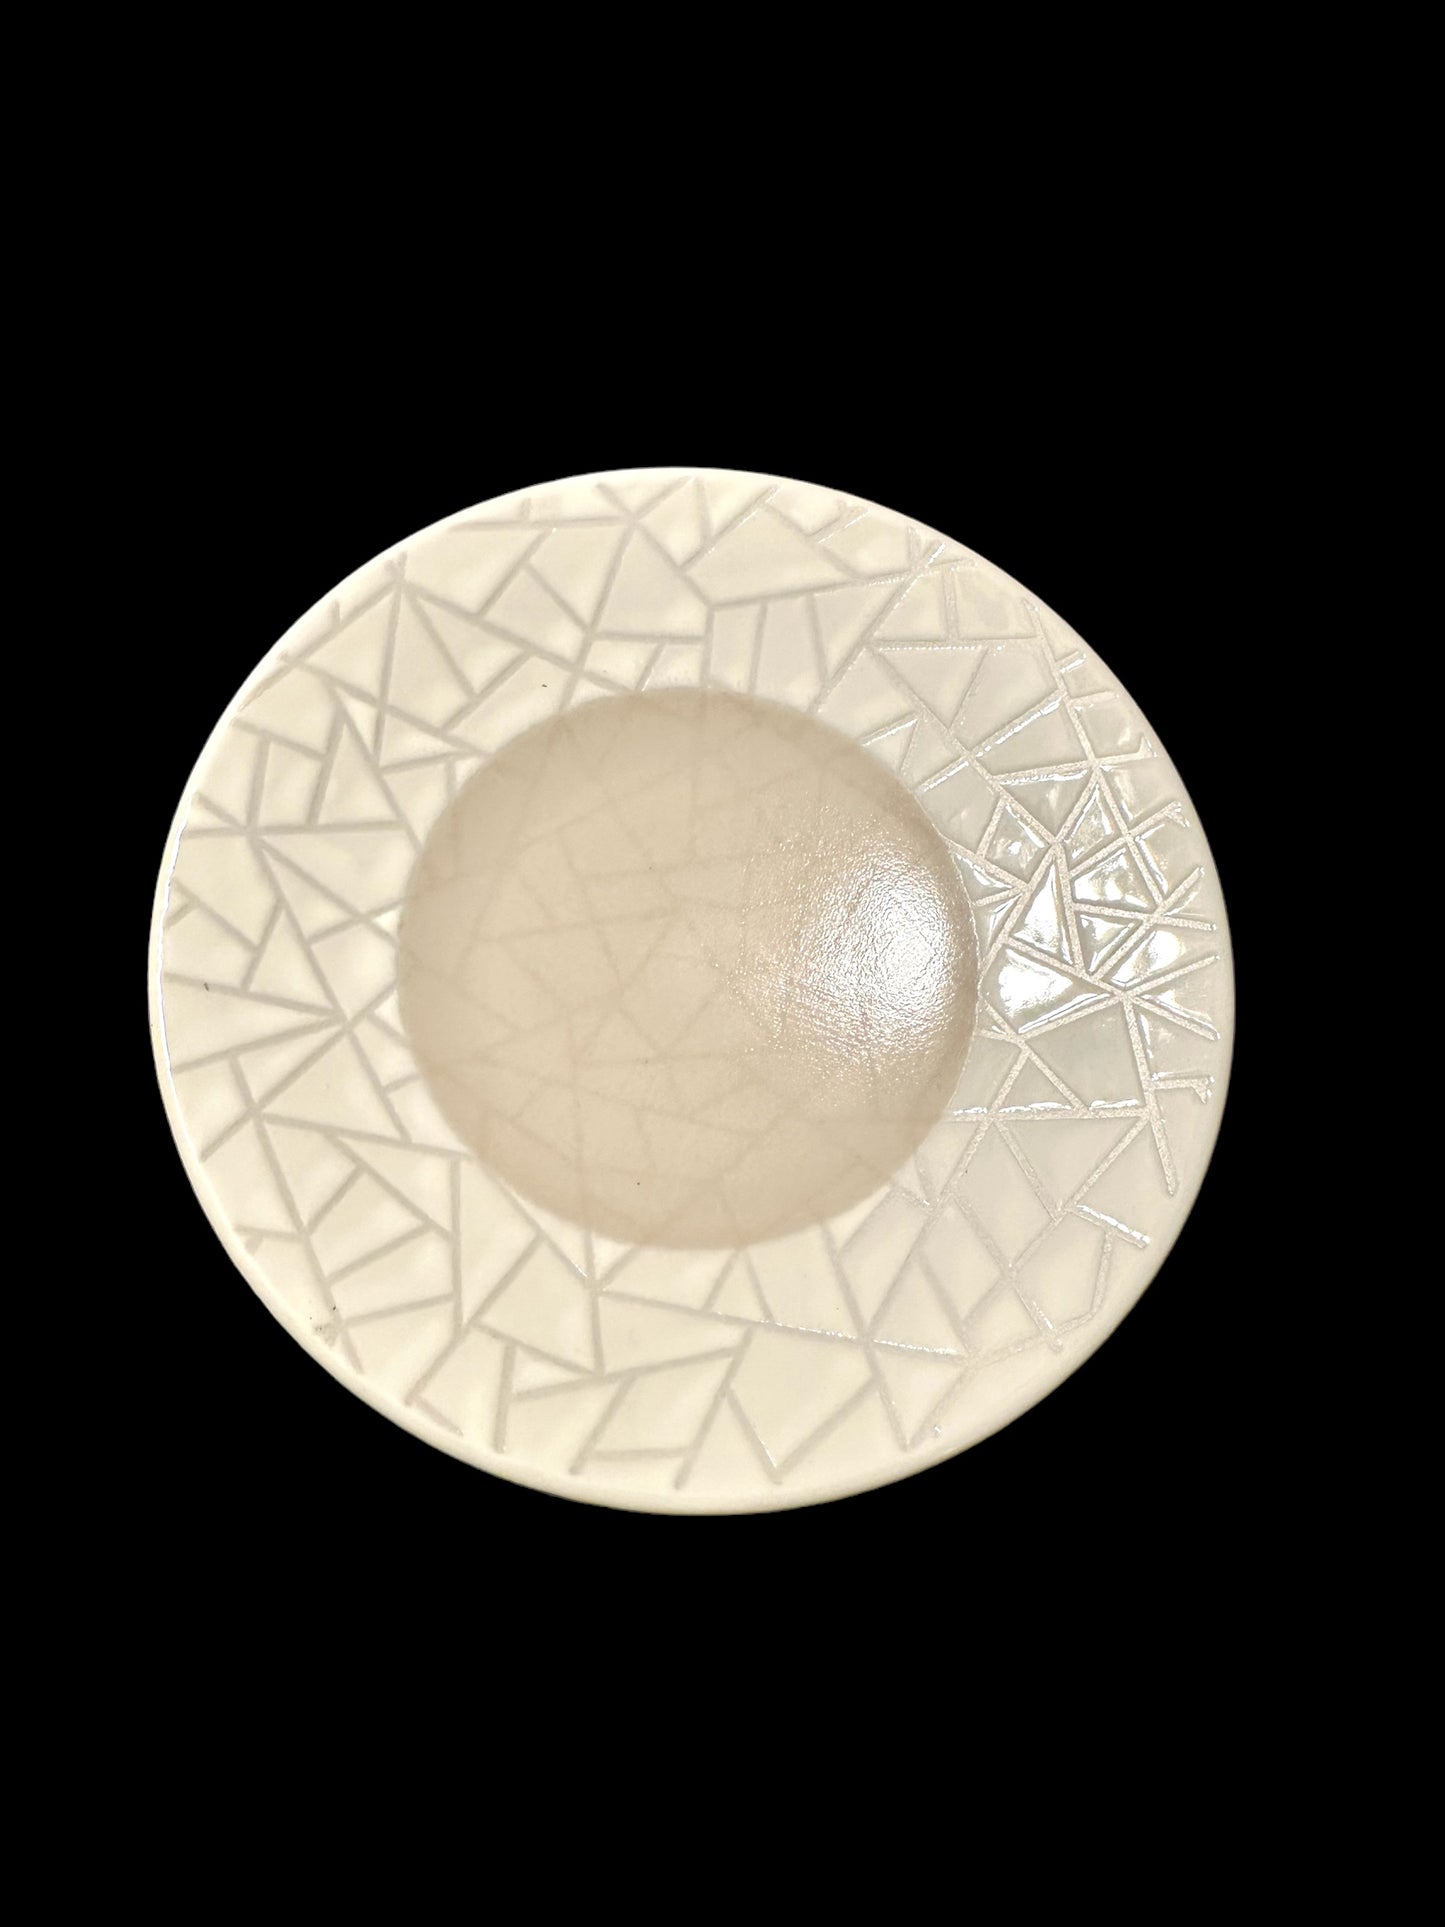 White/light brown mosaic, Japanese Ceramic Saucer, Diameter 5.5". x Height 1.8".